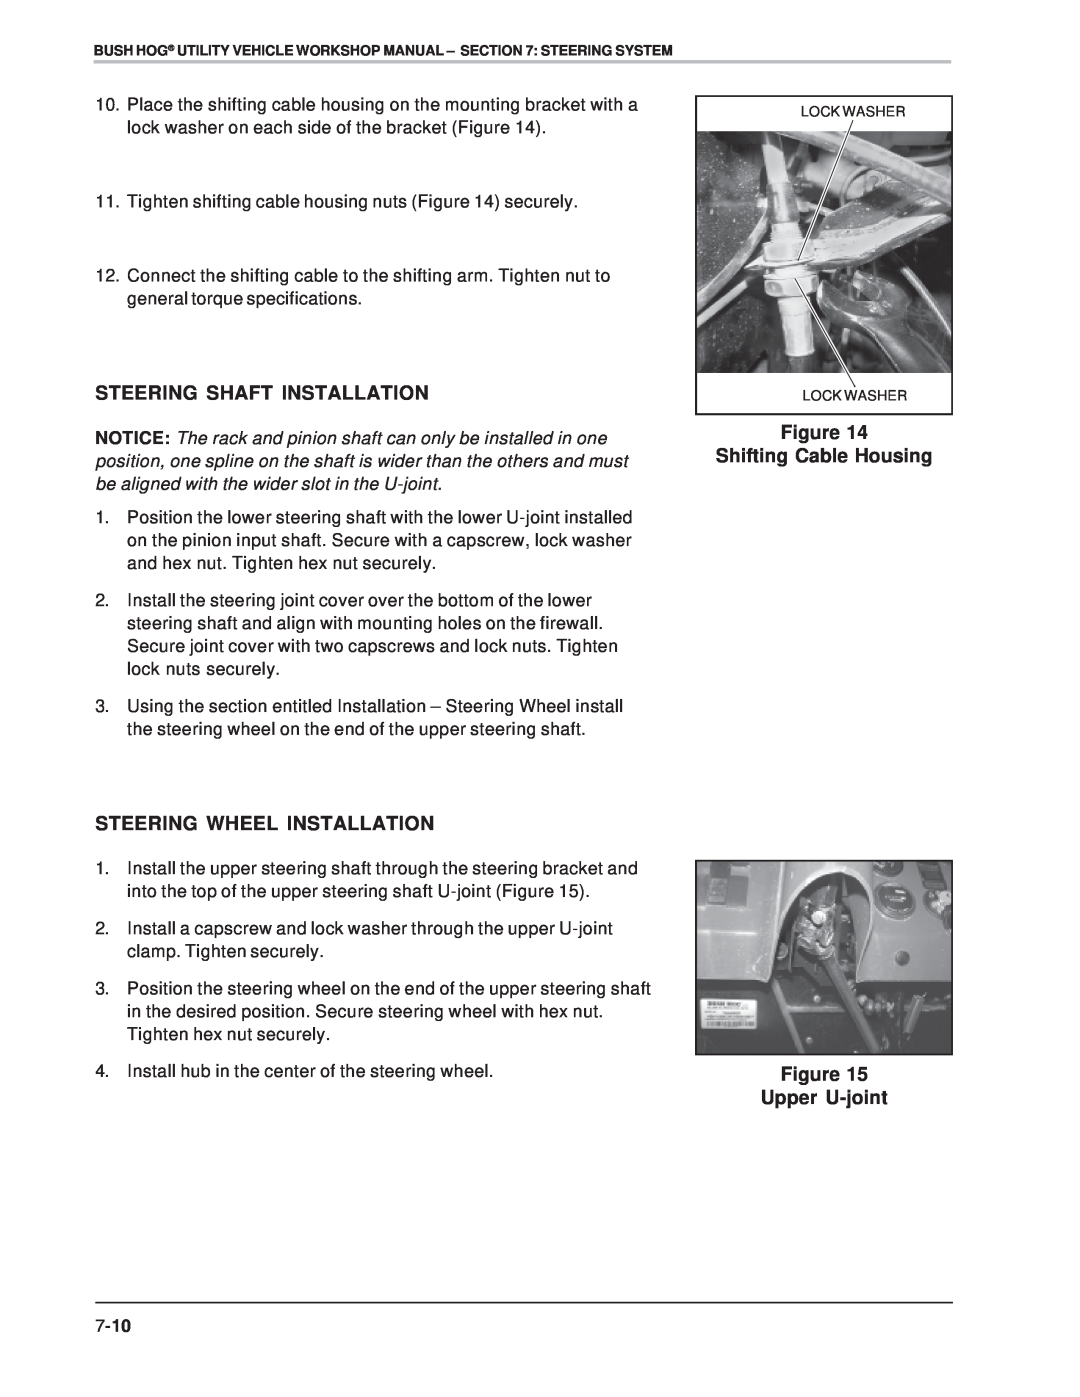 Bush Hog Utility Vehicle Workshop Steering Shaft Installation, Steering Wheel Installation, Upper U-joint, 7-10 